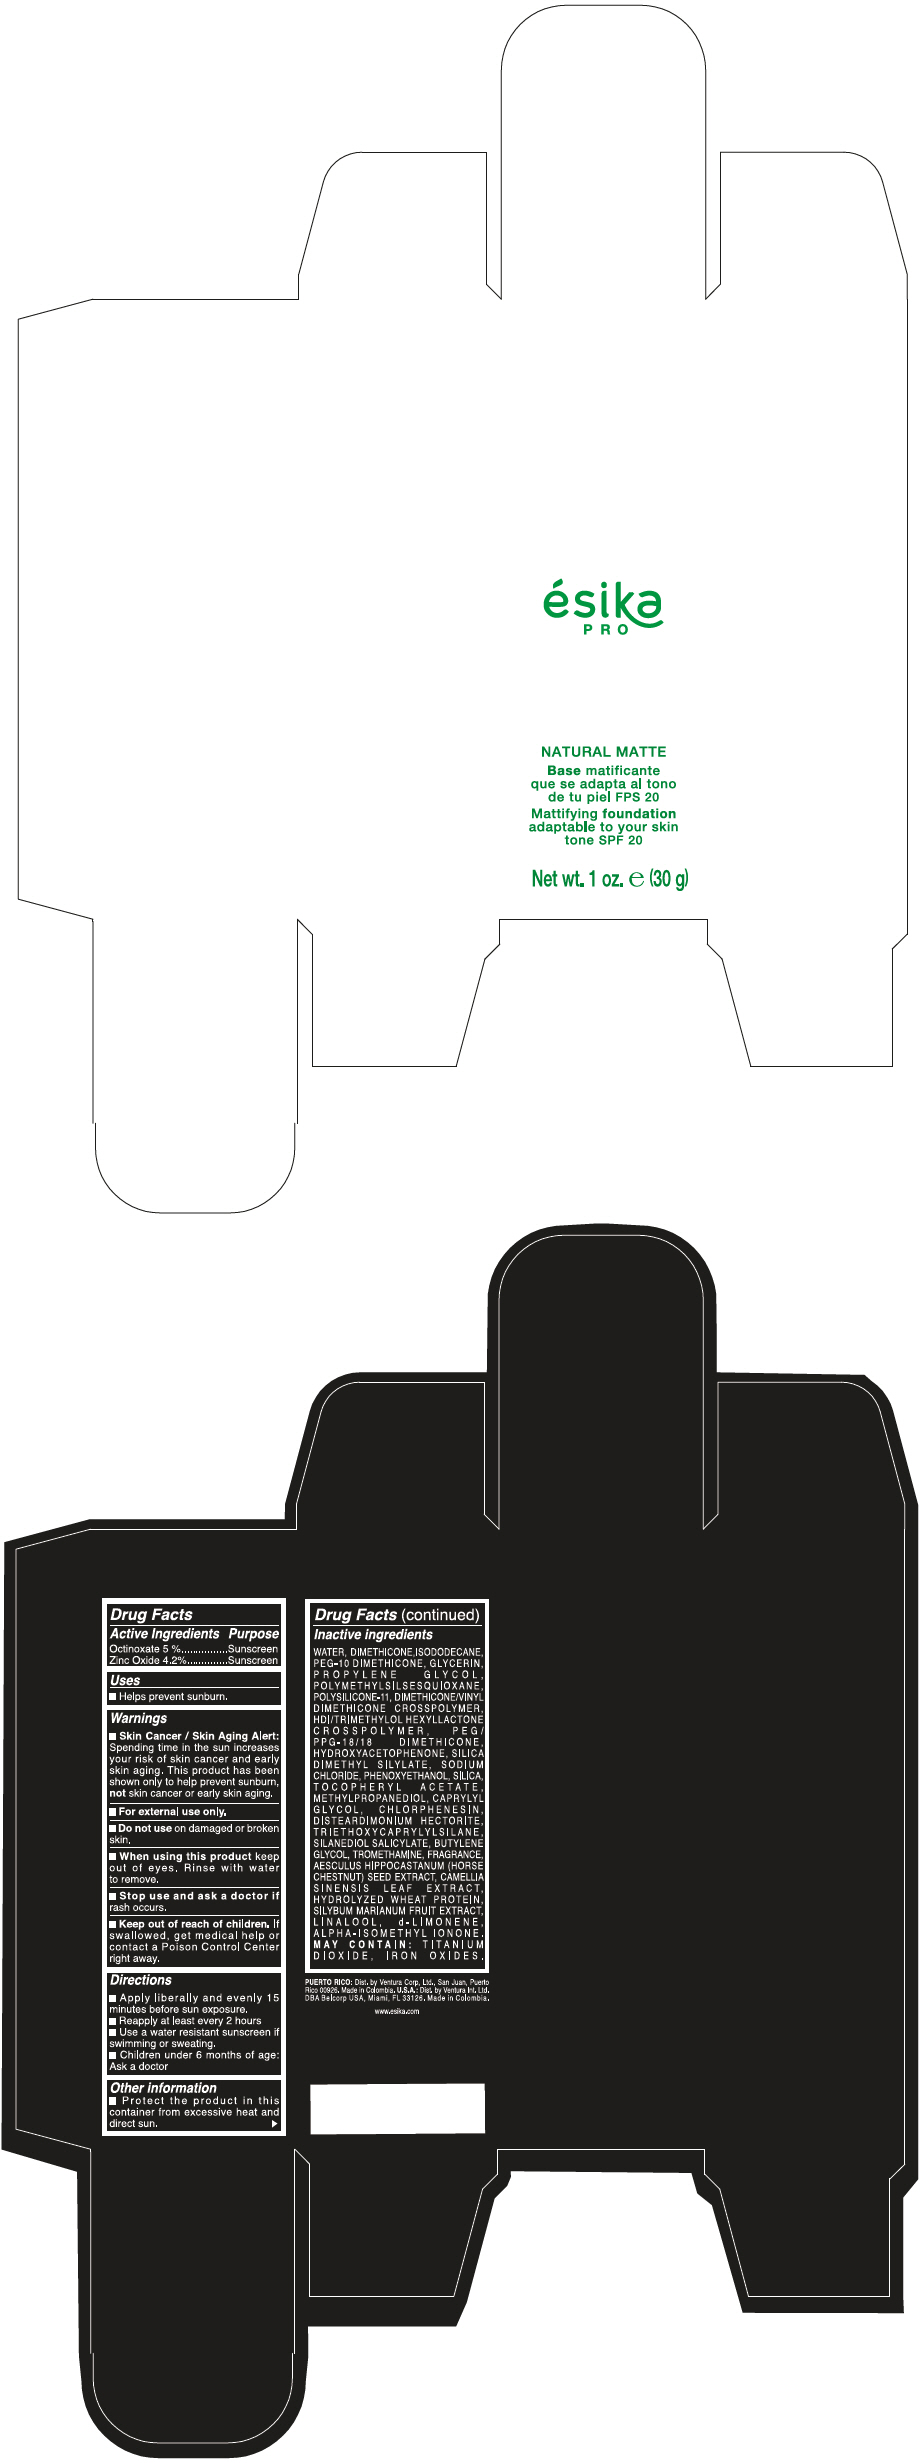 PRINCIPAL DISPLAY PANEL - 30 g Bottle Box - Medio1/Beige